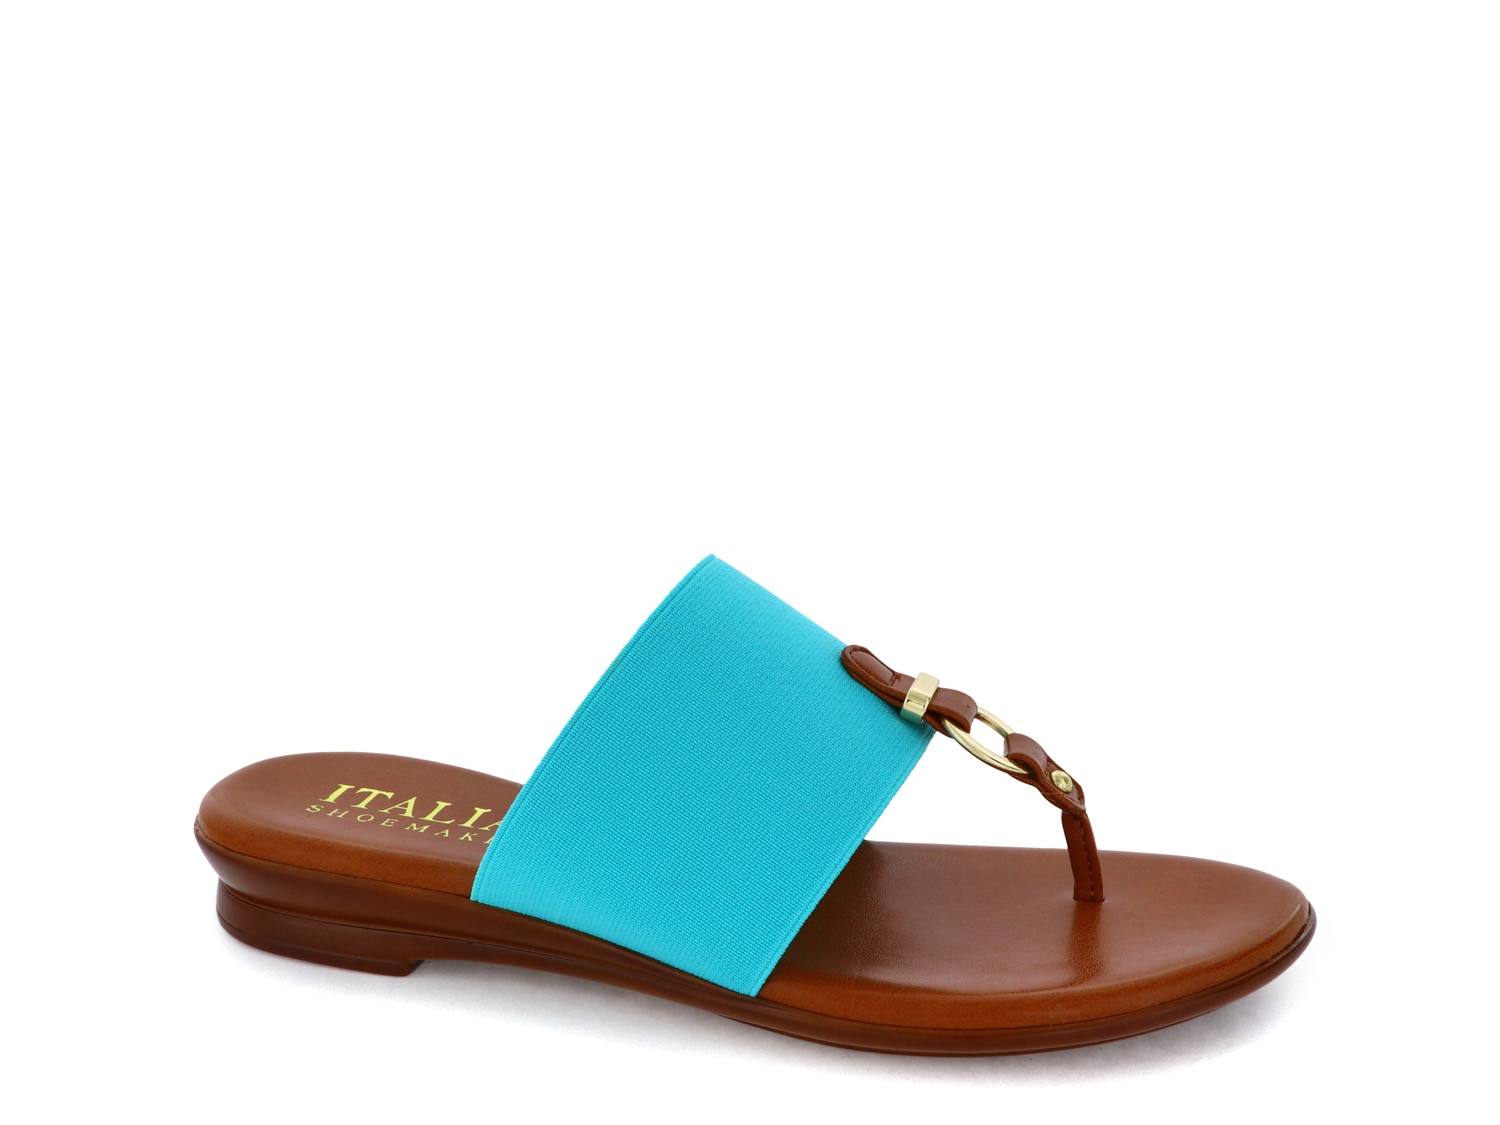 turquoise sandals